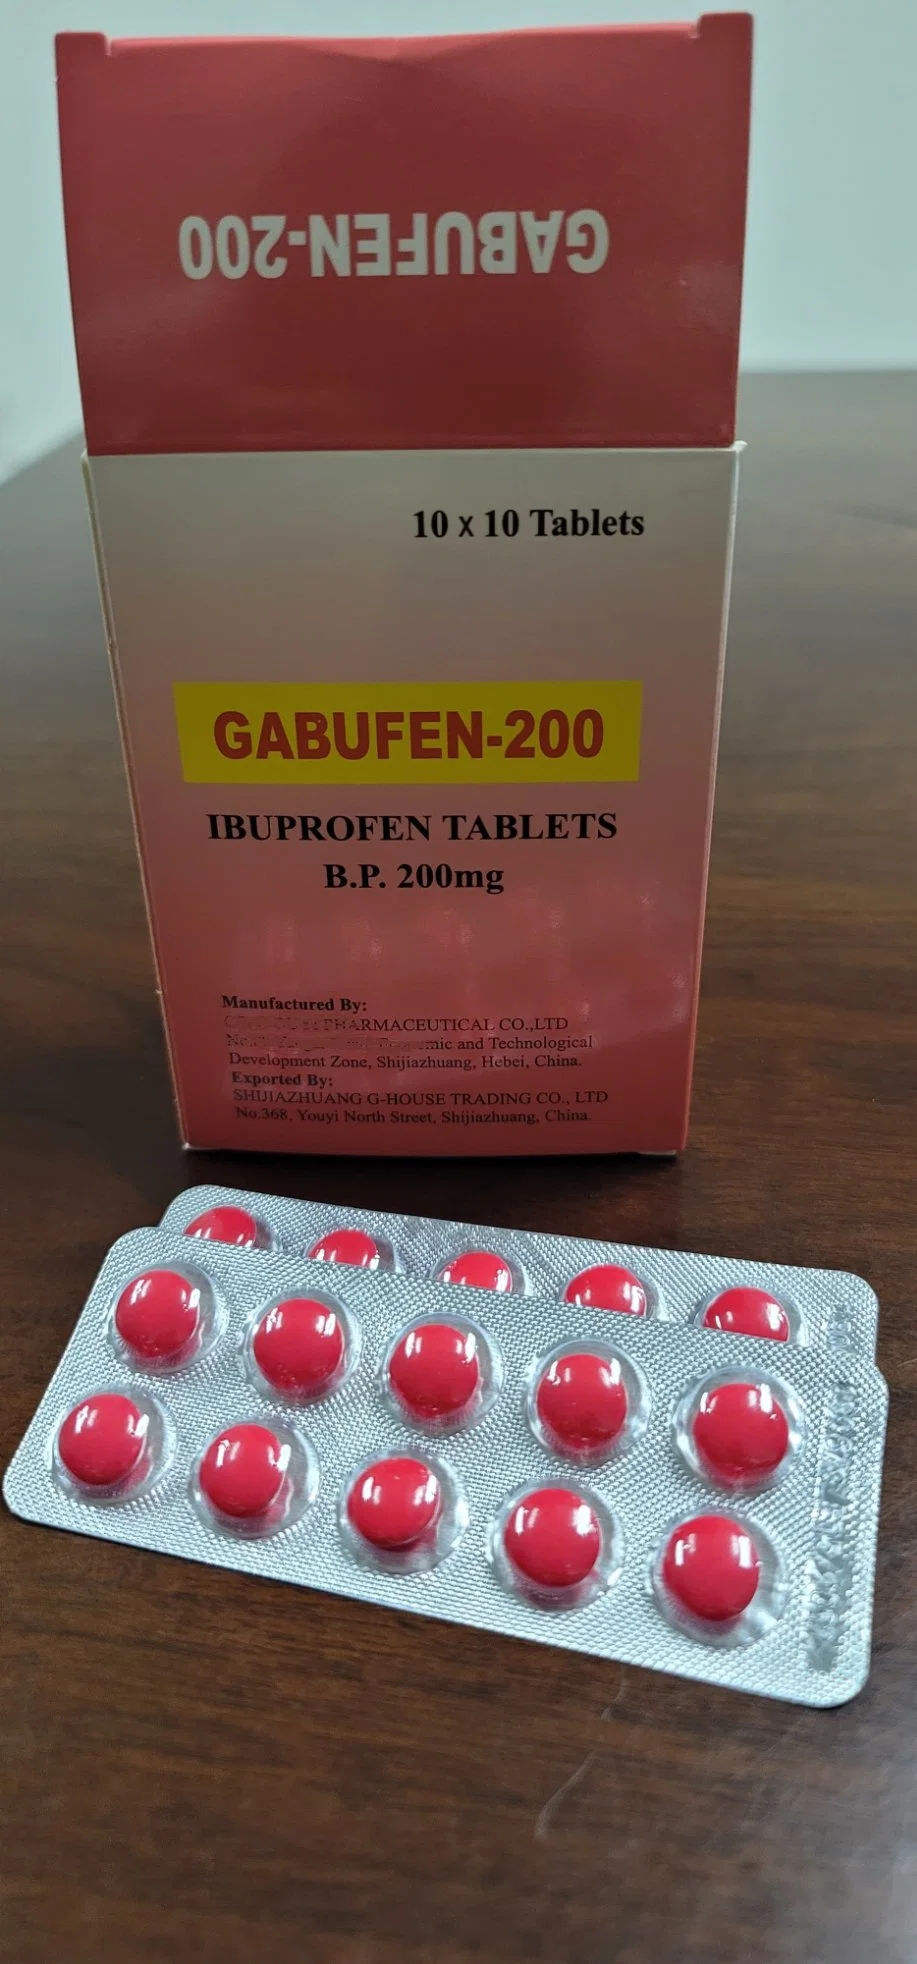 Ibuprofen Tabletten 200mg qualitativ hochwertige Arzneimittel